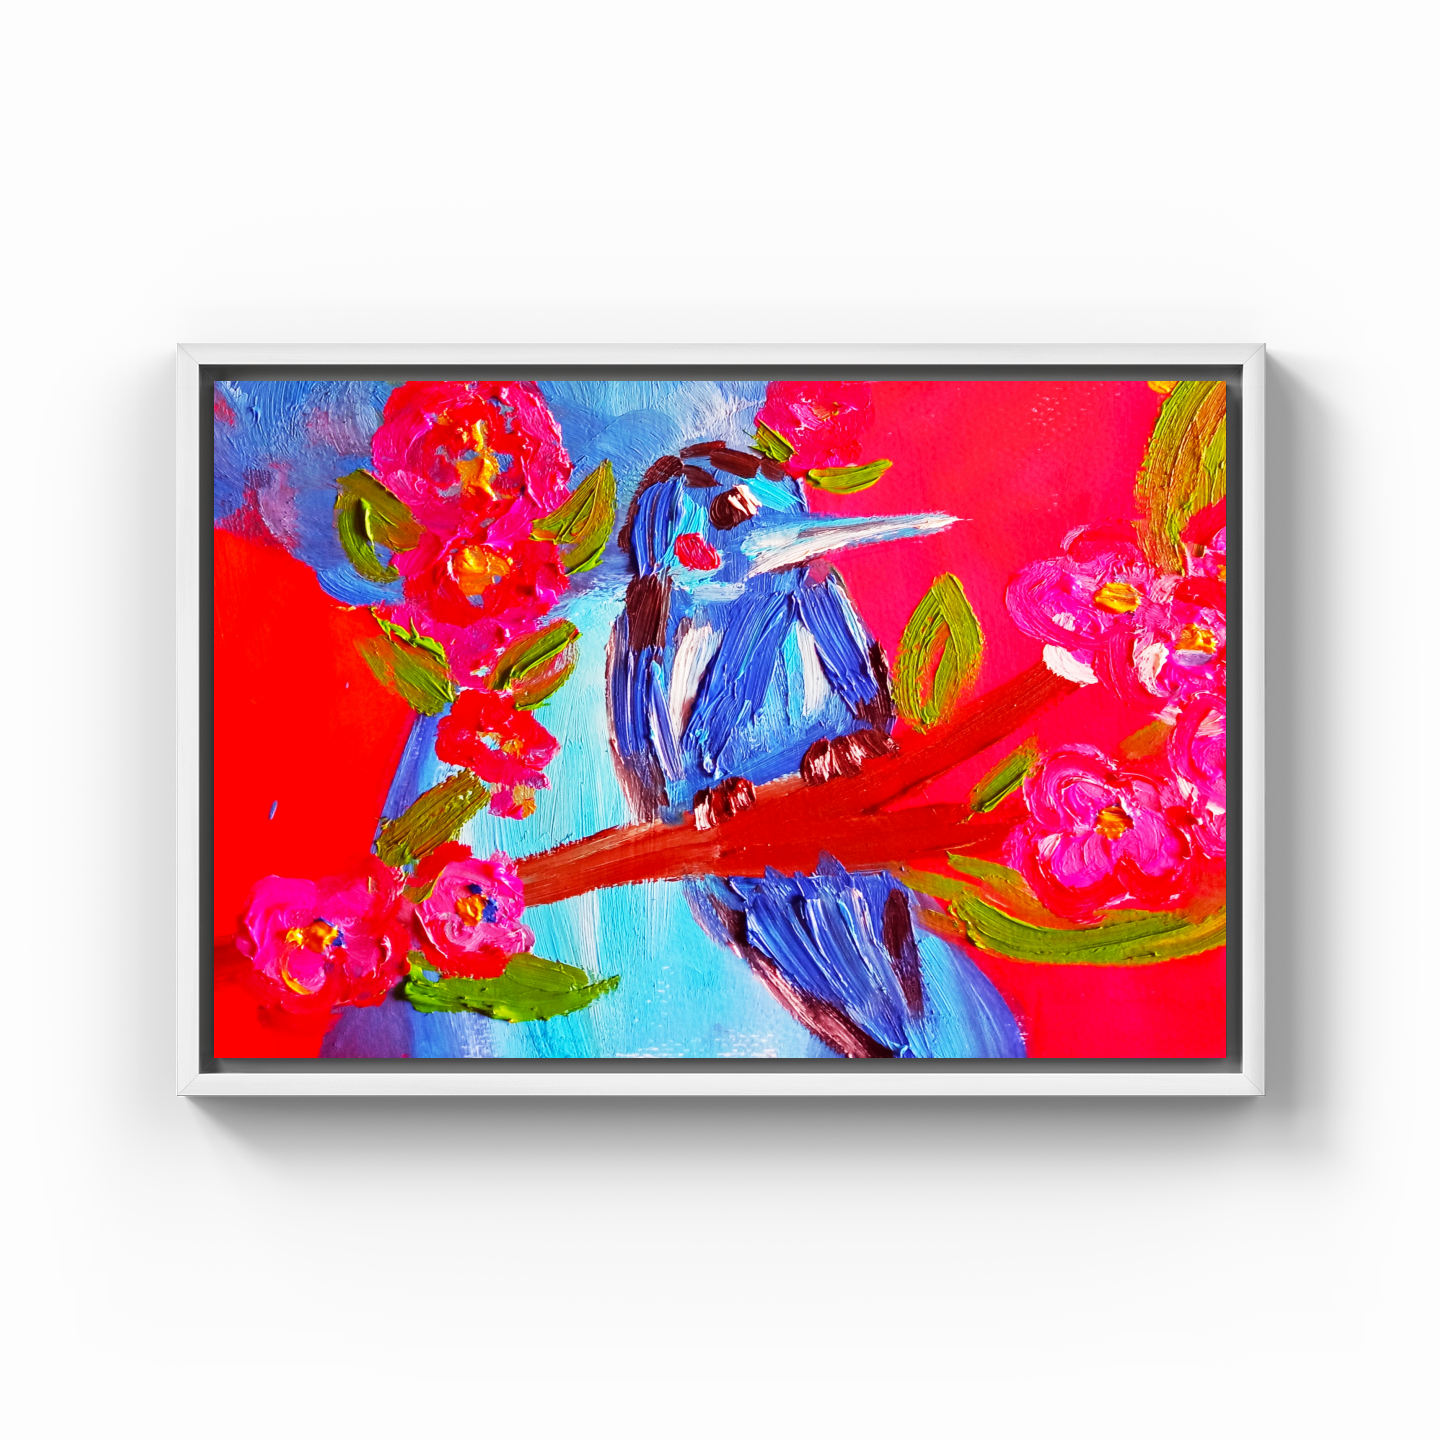 Hüzünkovan kuşu - Kanvas Tablo